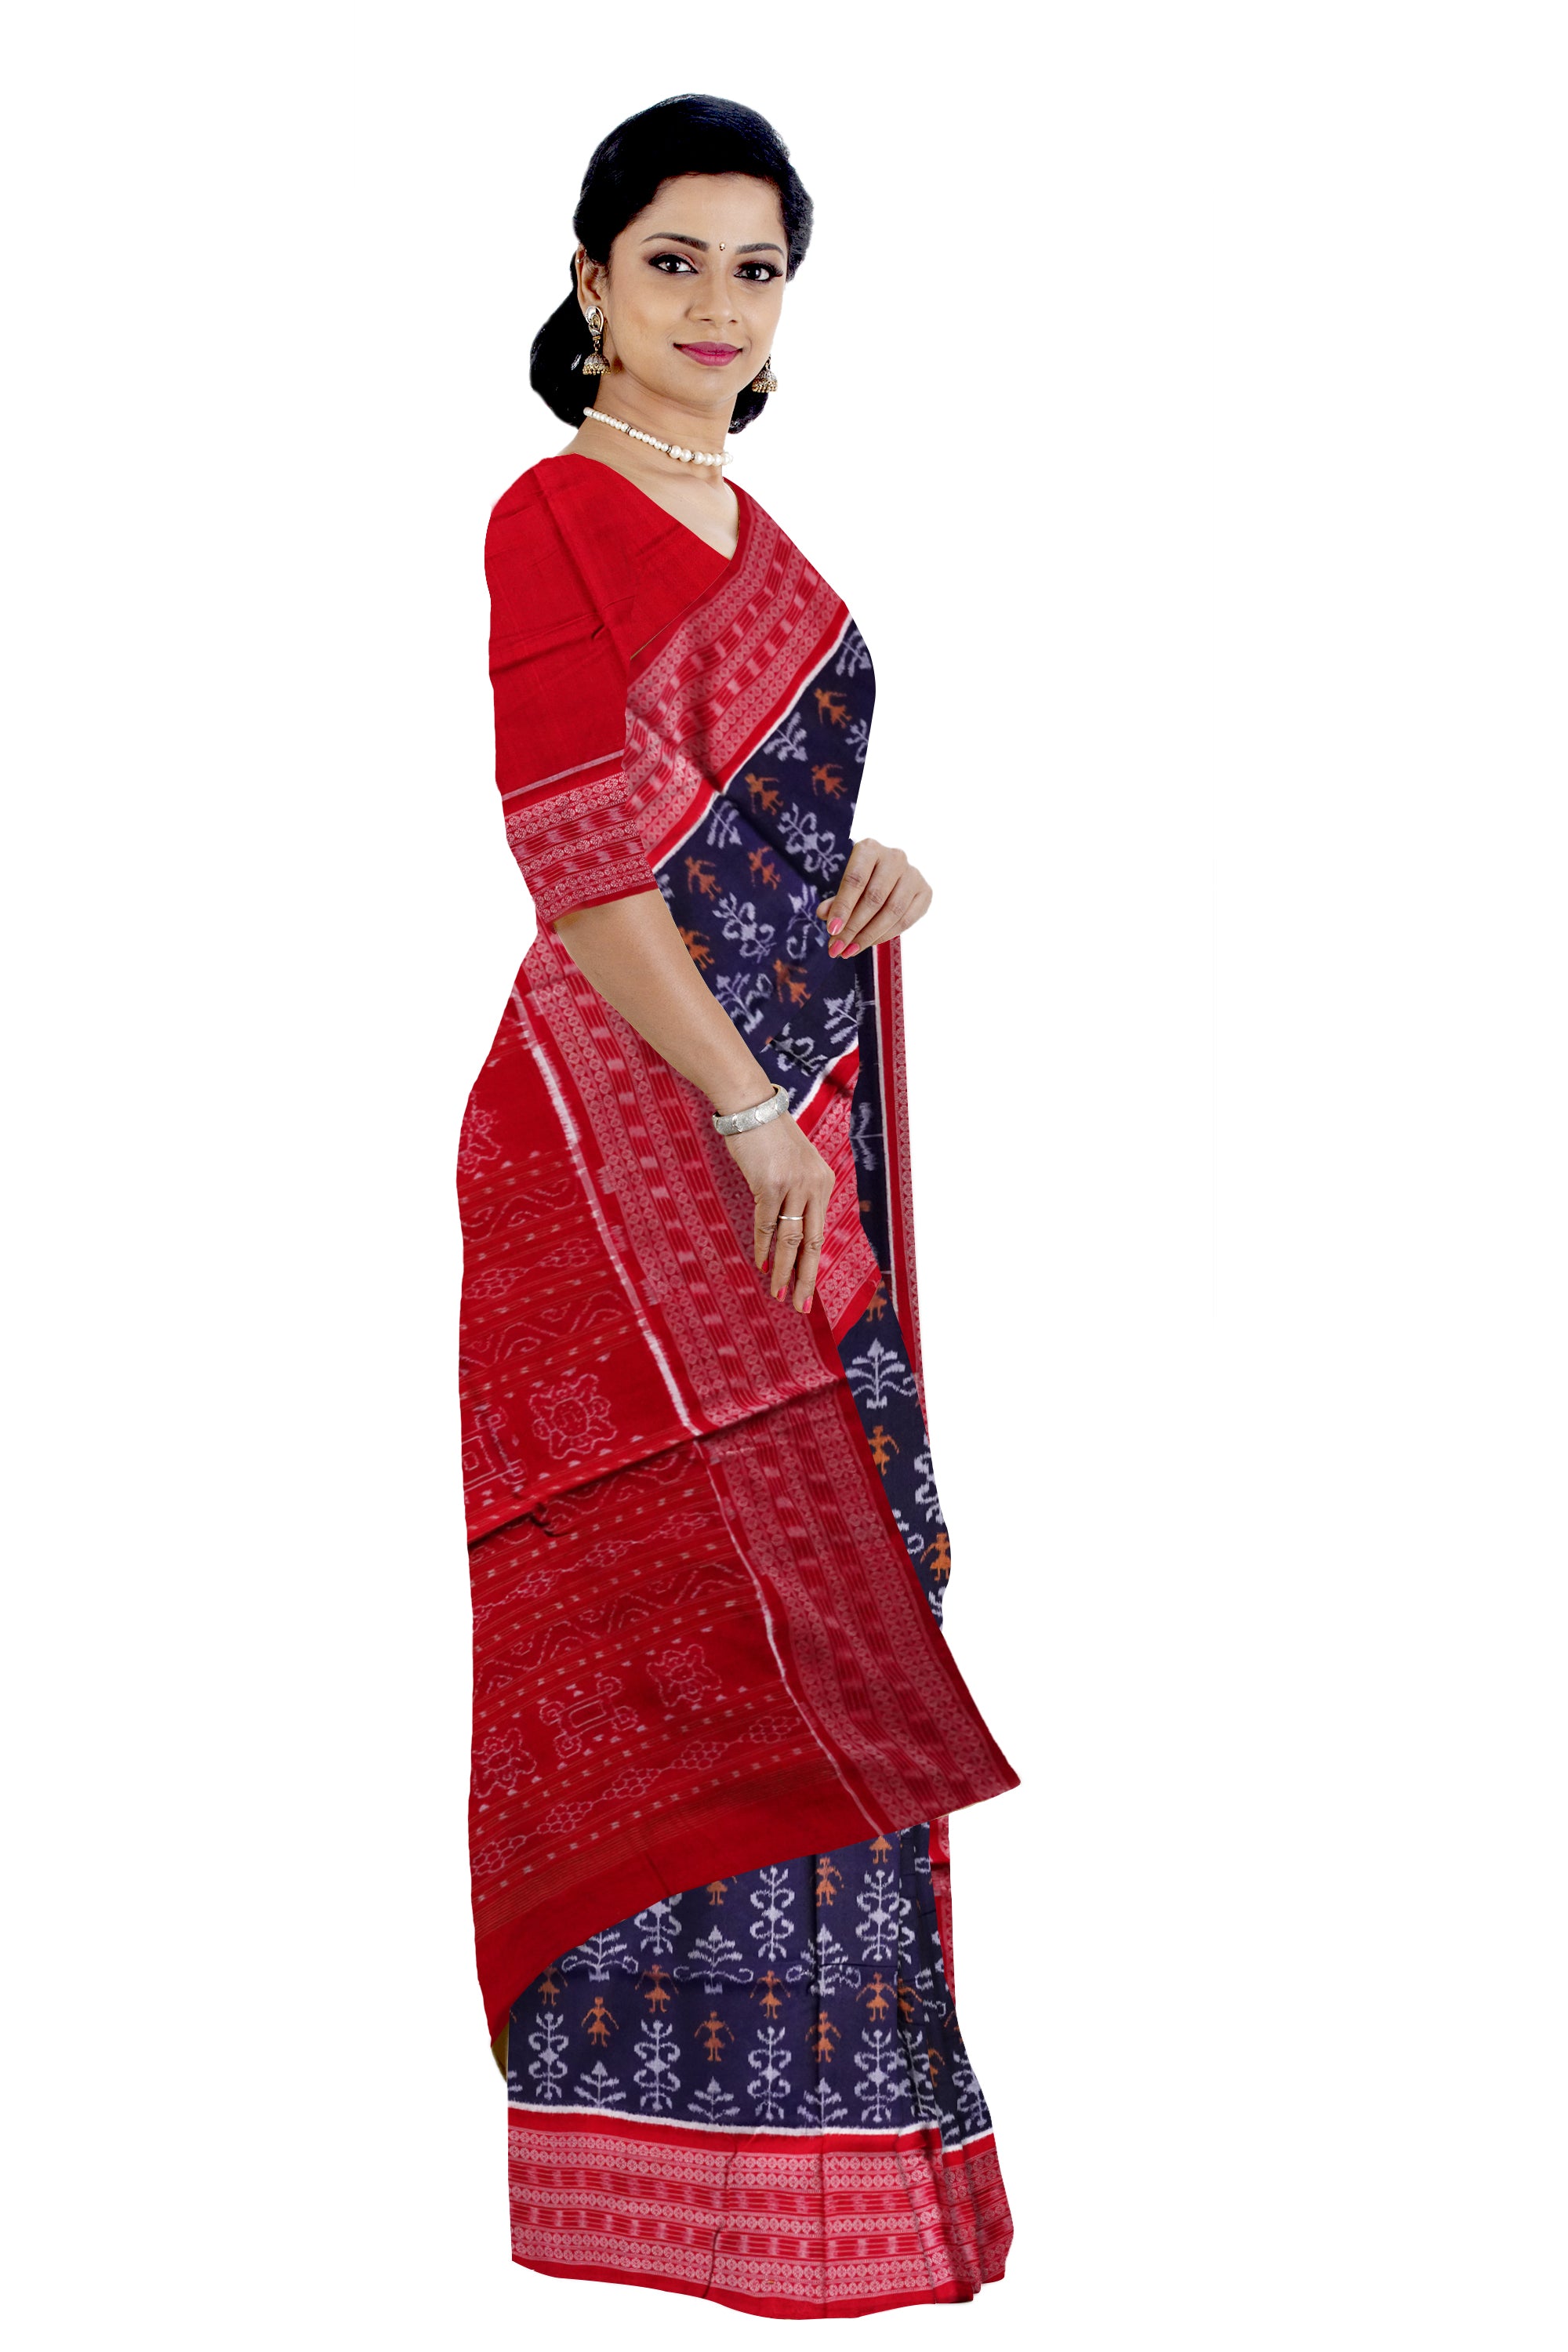 Copy of Copy of Different letter pattern Sambalpuri cotton saree is black and Deeppink color. - Koshali Arts & Crafts Enterprise